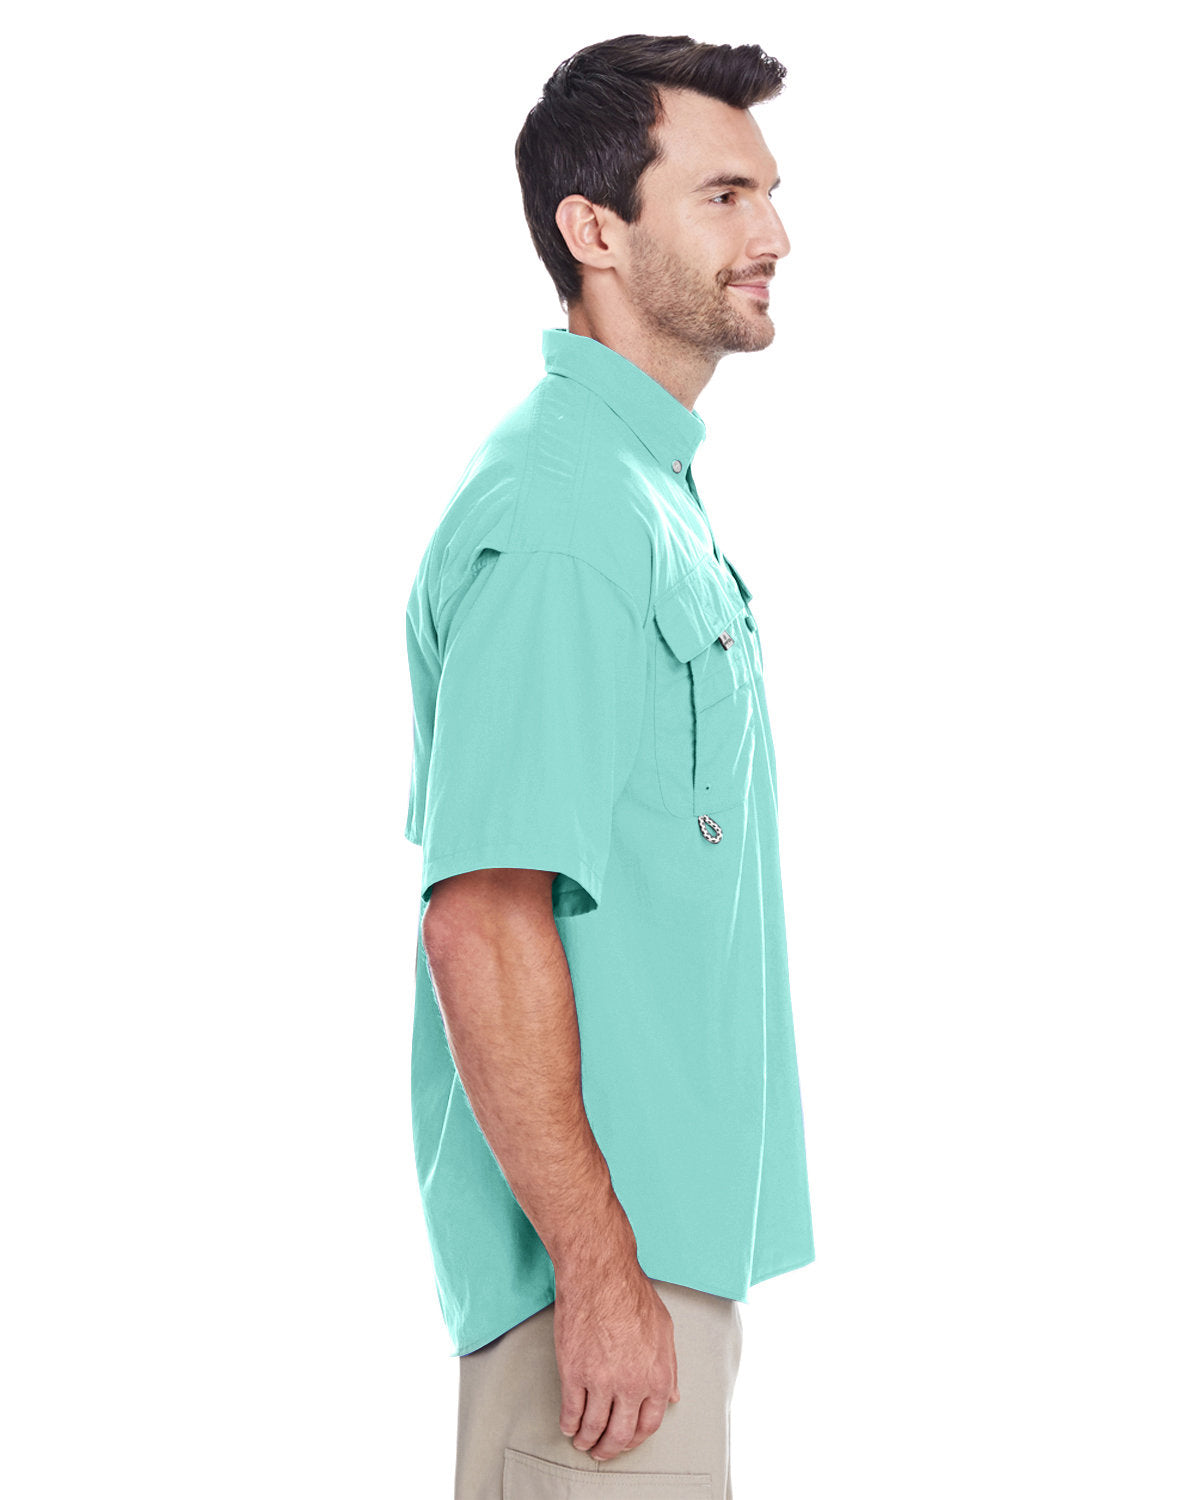 Columbia Men's Gulf Stream Bahama Long-Sleeve Shirt